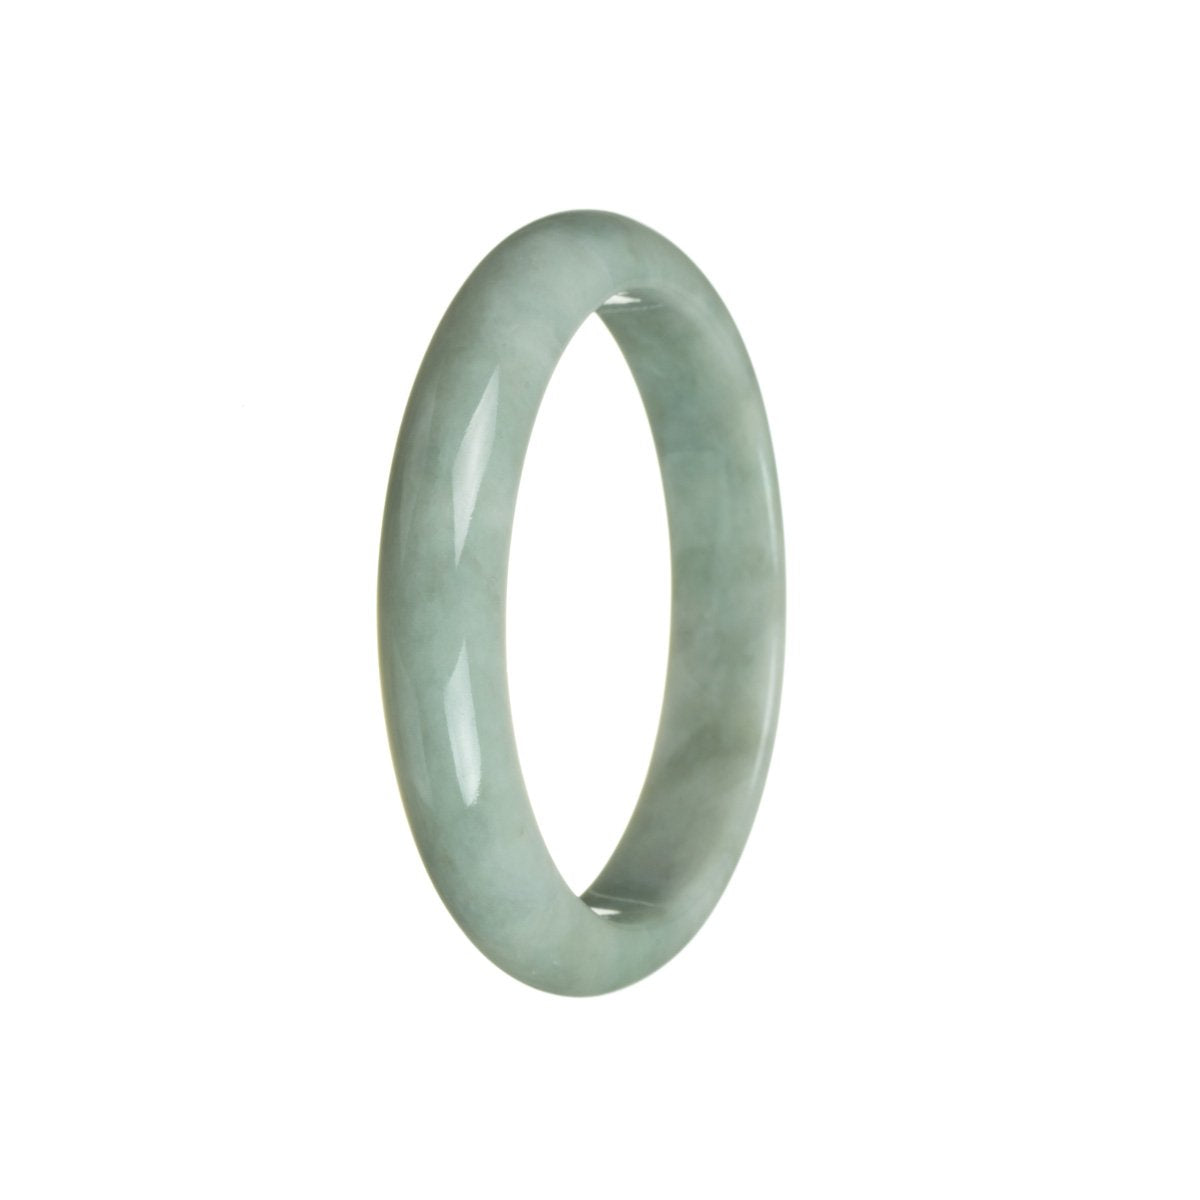 Certified Grade A Green Burmese Jade Bracelet - 59mm Half Moon